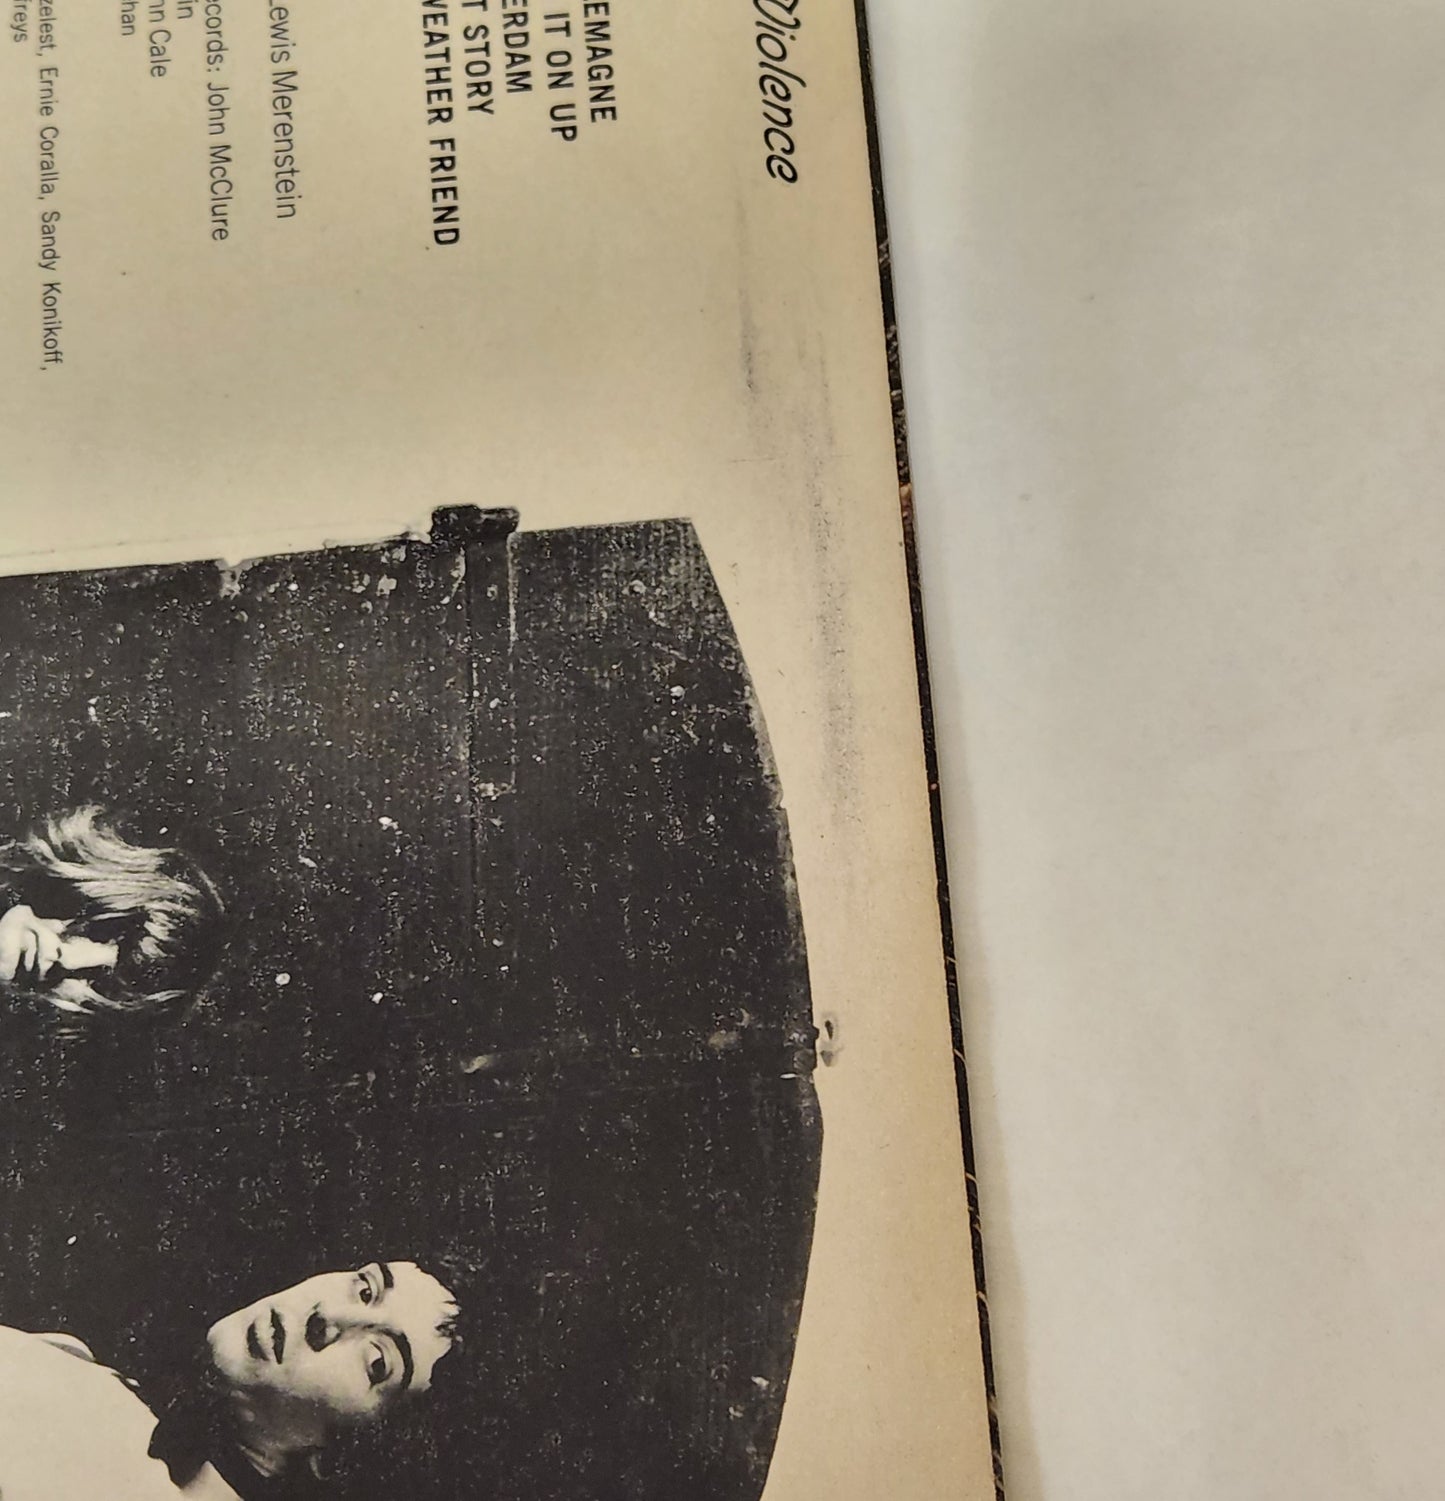 John Cale "Vintage Violence" 1974 Art Rock Record Album